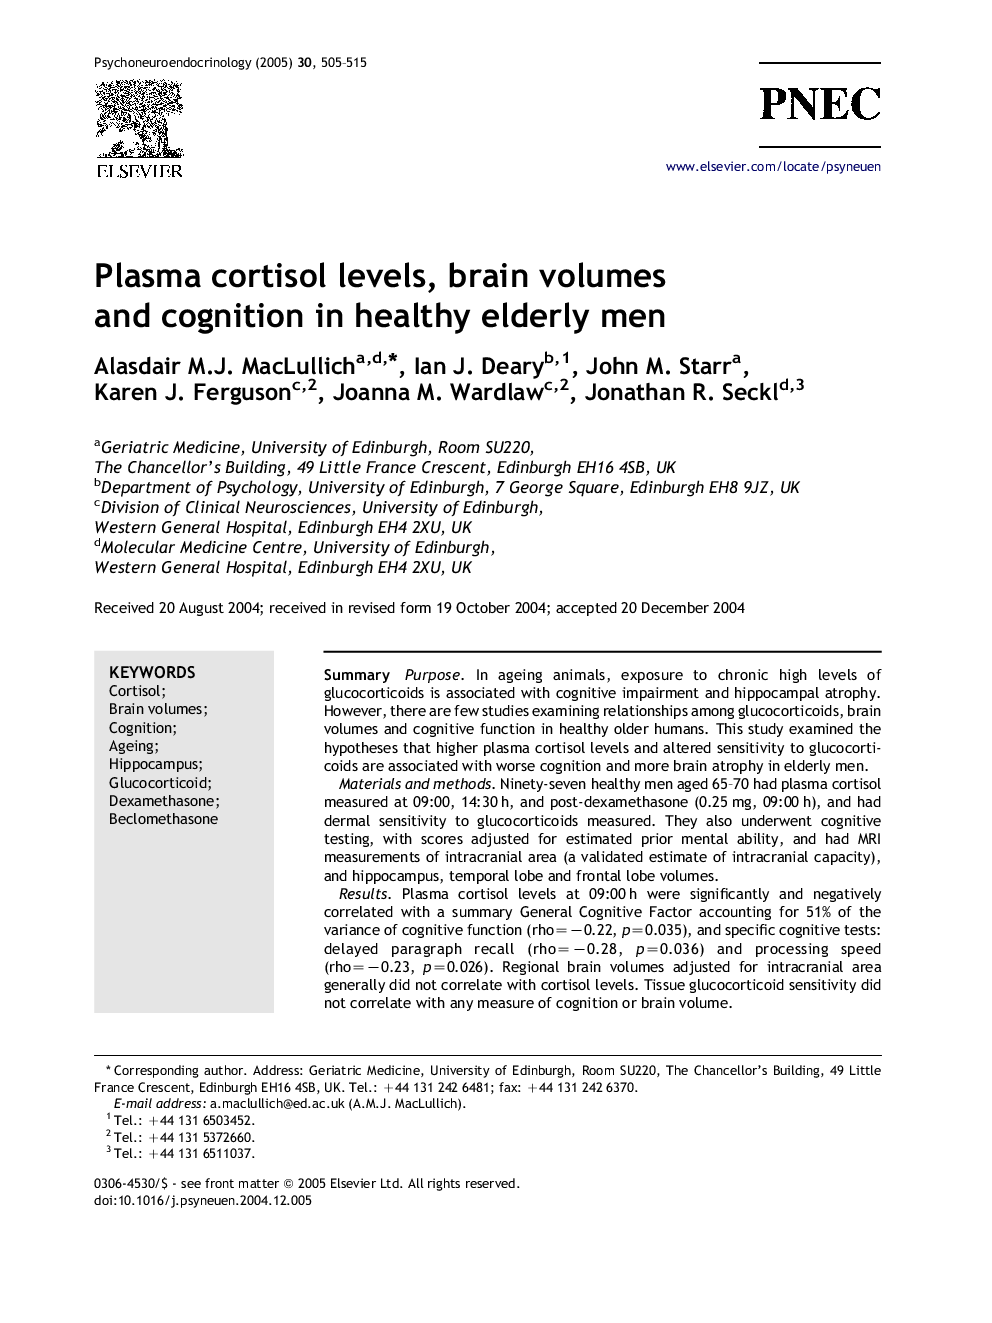 Plasma cortisol levels, brain volumes and cognition in healthy elderly men